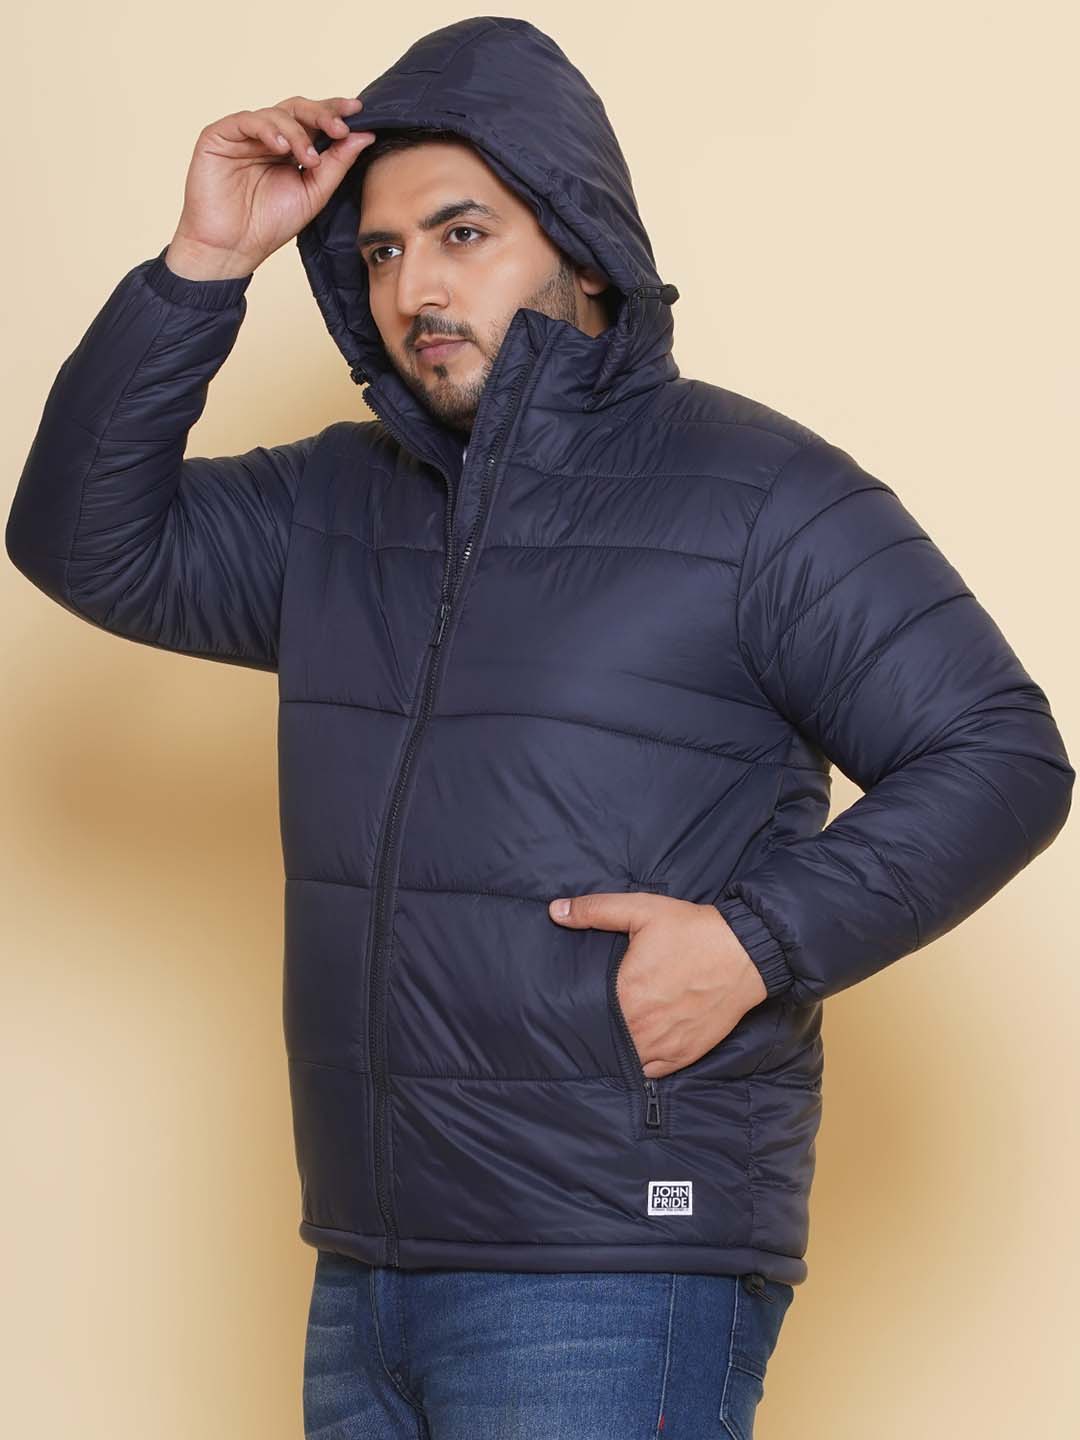 winterwear/jackets/JPJKT73084B/jpjkt73084b-4.jpg